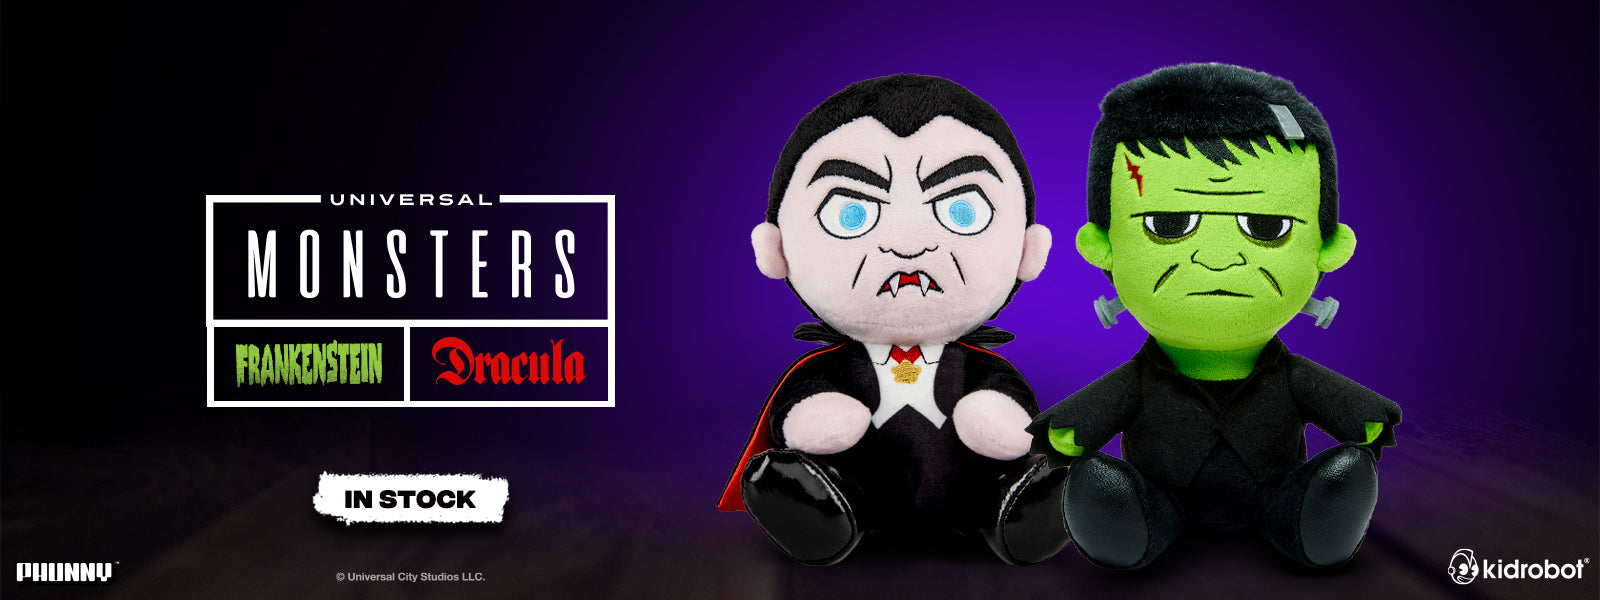 Frank and Dracula